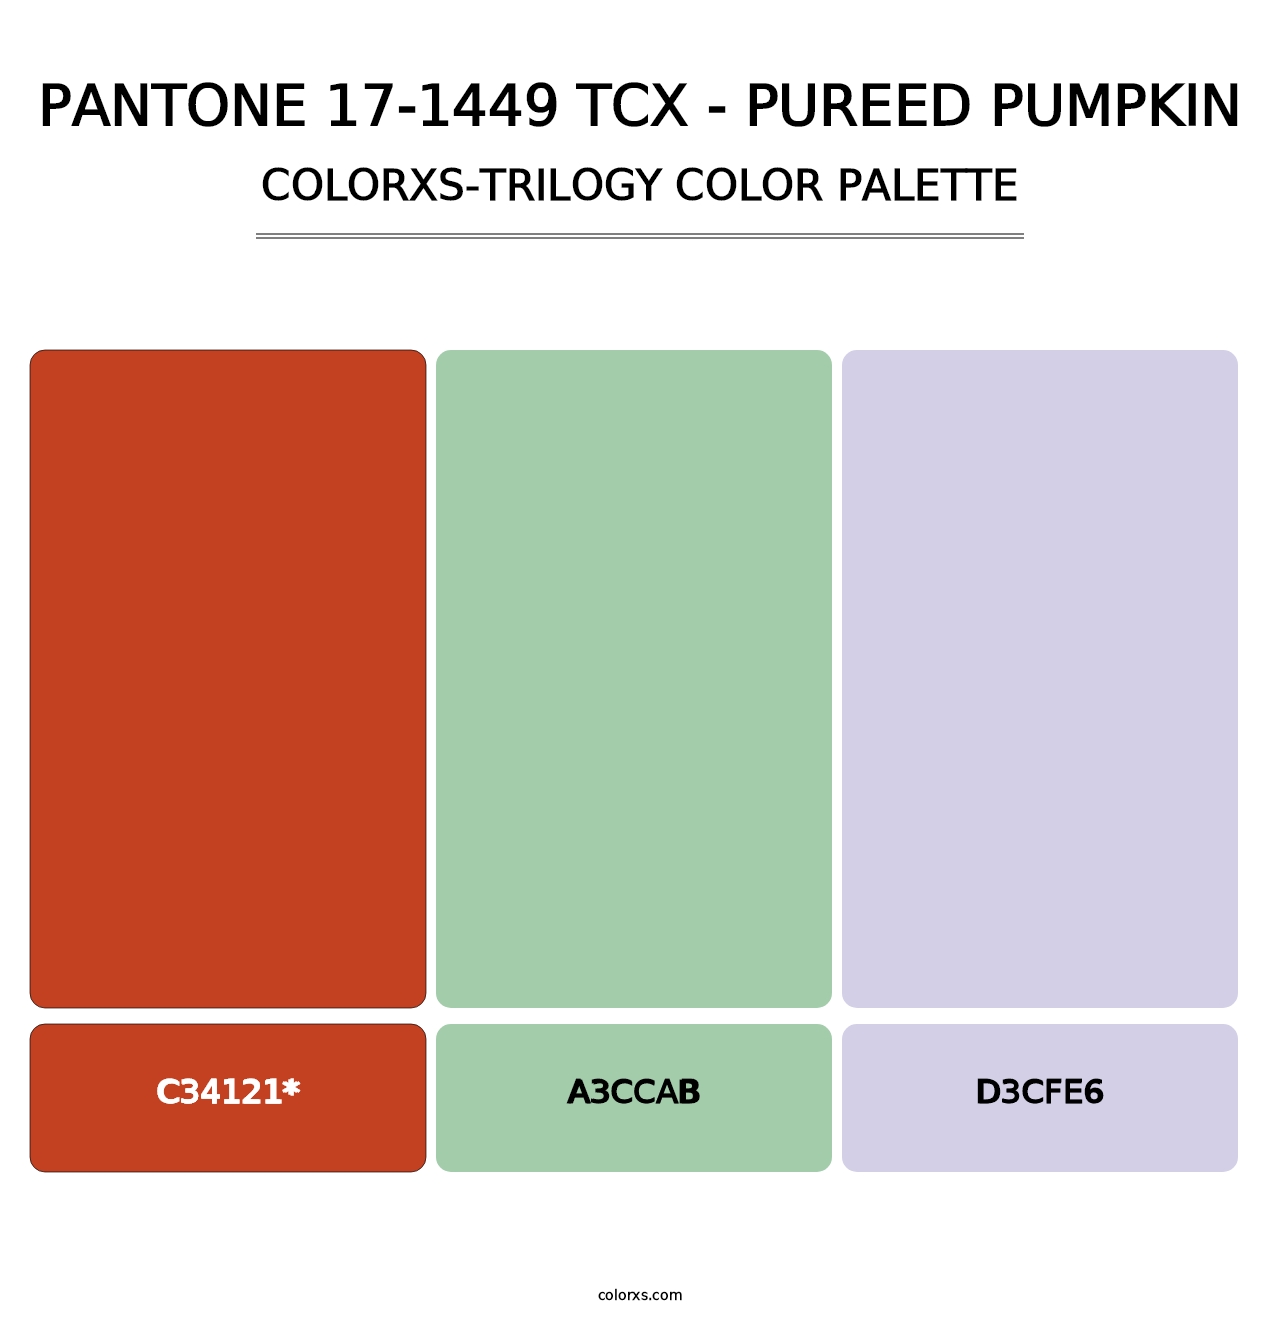 PANTONE 17-1449 TCX - Pureed Pumpkin - Colorxs Trilogy Palette